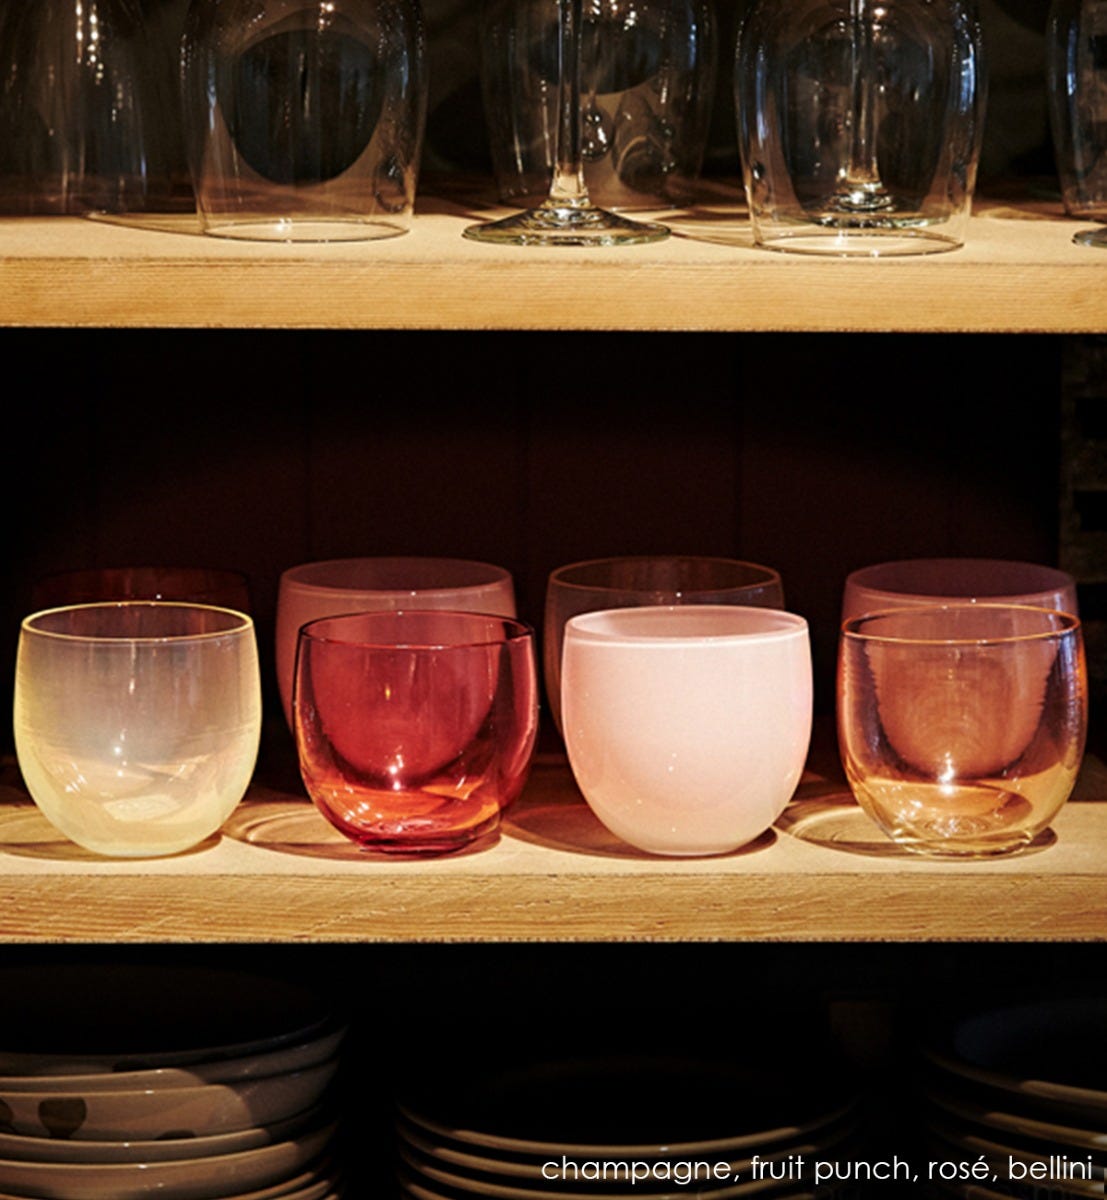 hand-blown soft pink drinking glass.